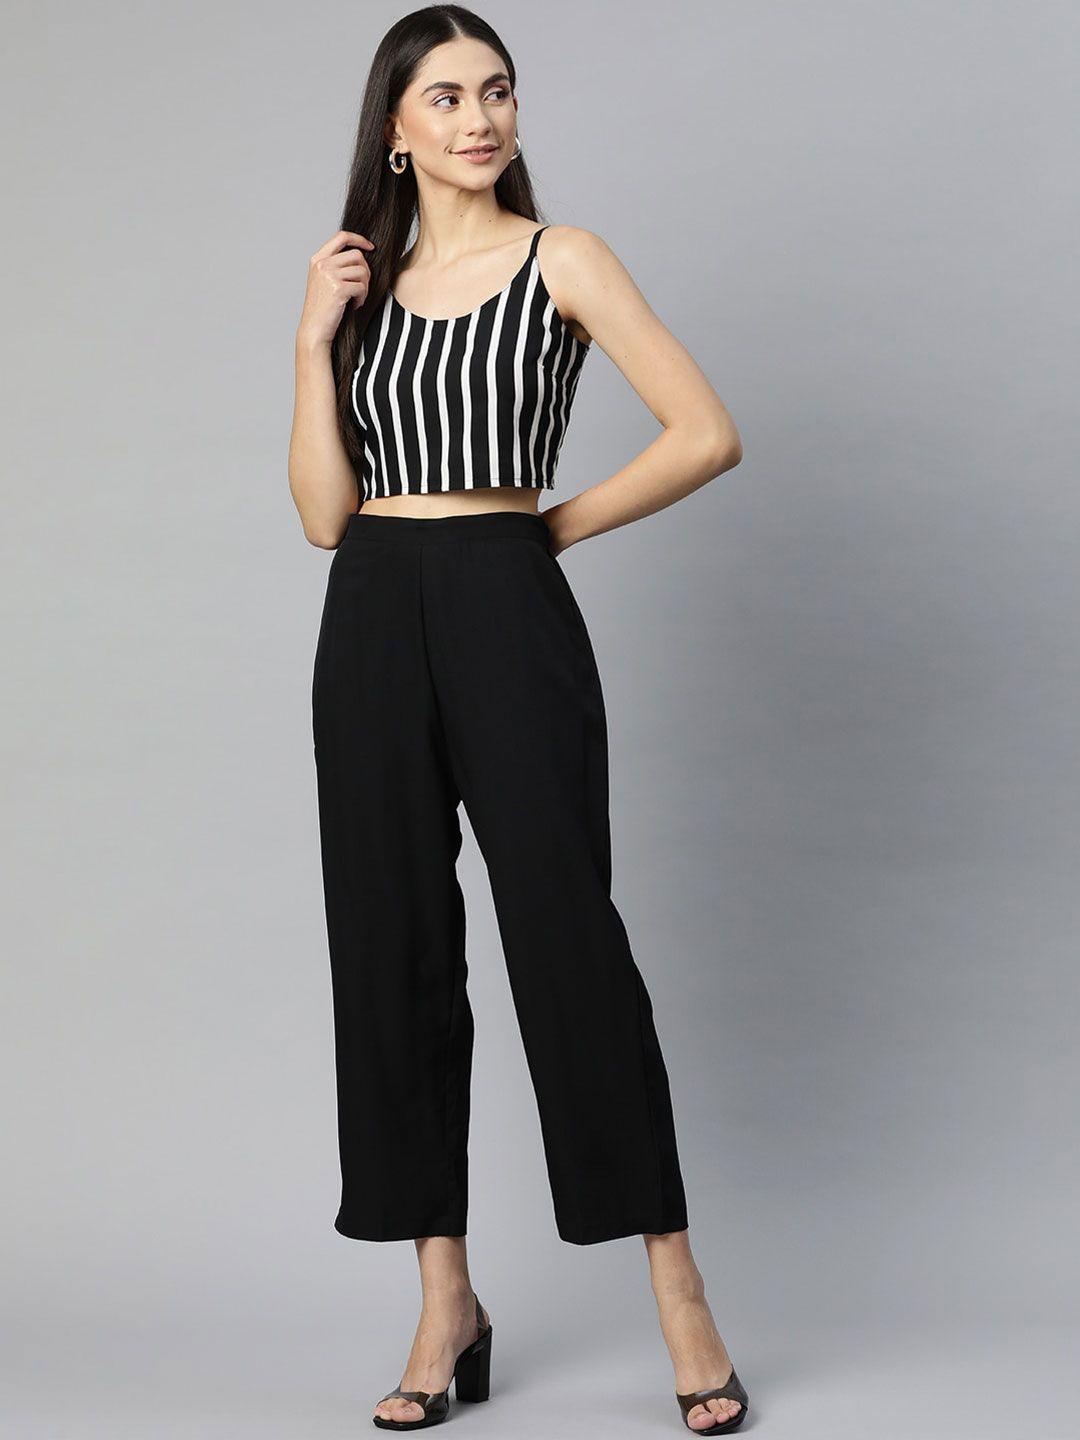 sirikit striped top & trouser co-ord set